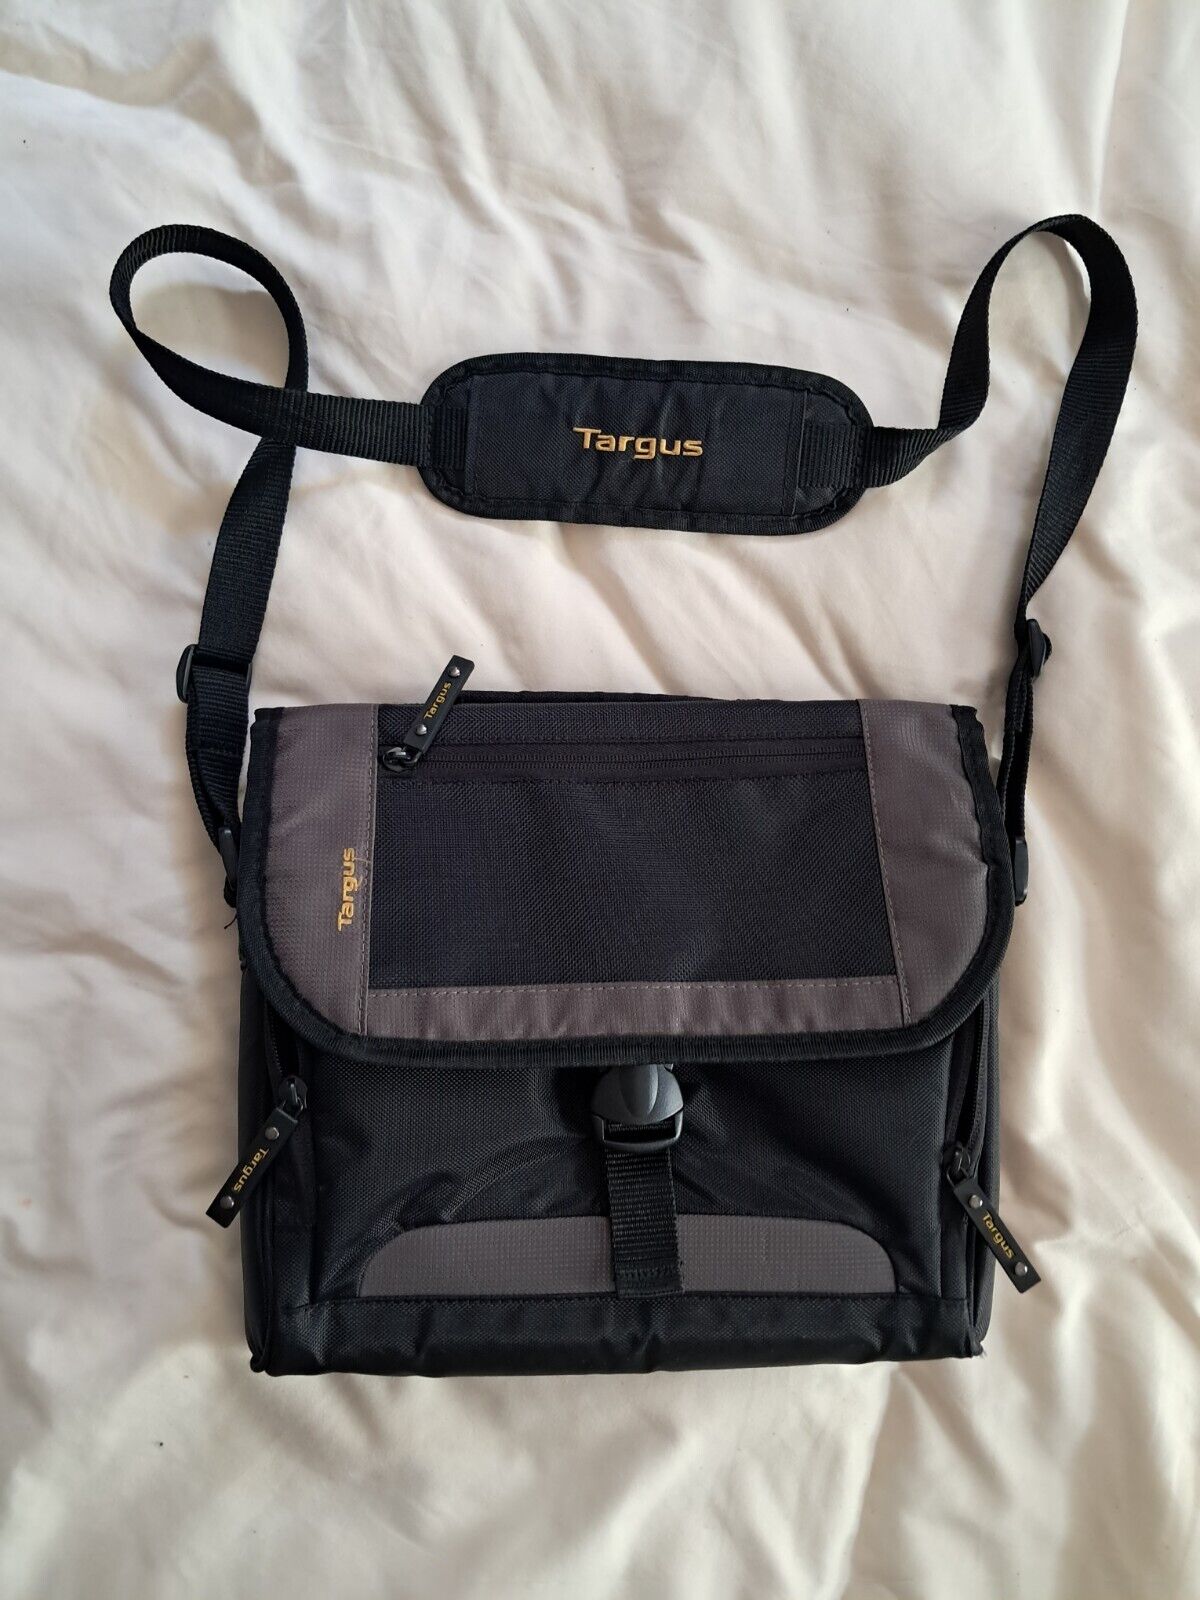 Targus Messenger 11” Laptop Bag Computer Brief Case Shoulder Strap Heavy Duty